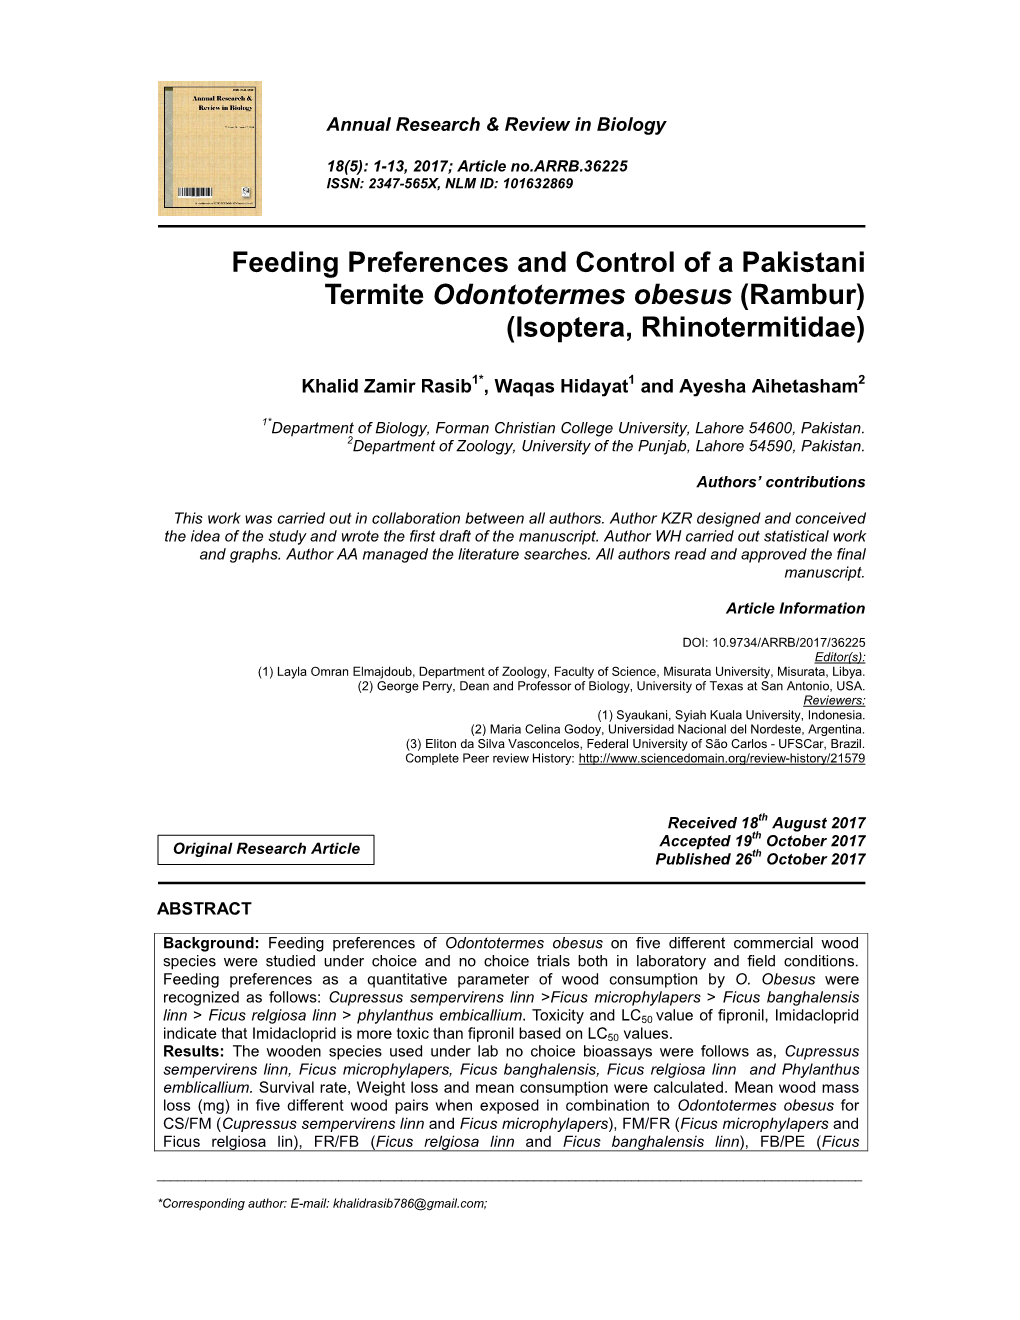 Feeding Preferences and Control of a Pakistani Termite Odontotermes Obesus (Rambur) (Isoptera, Rhinotermitidae)